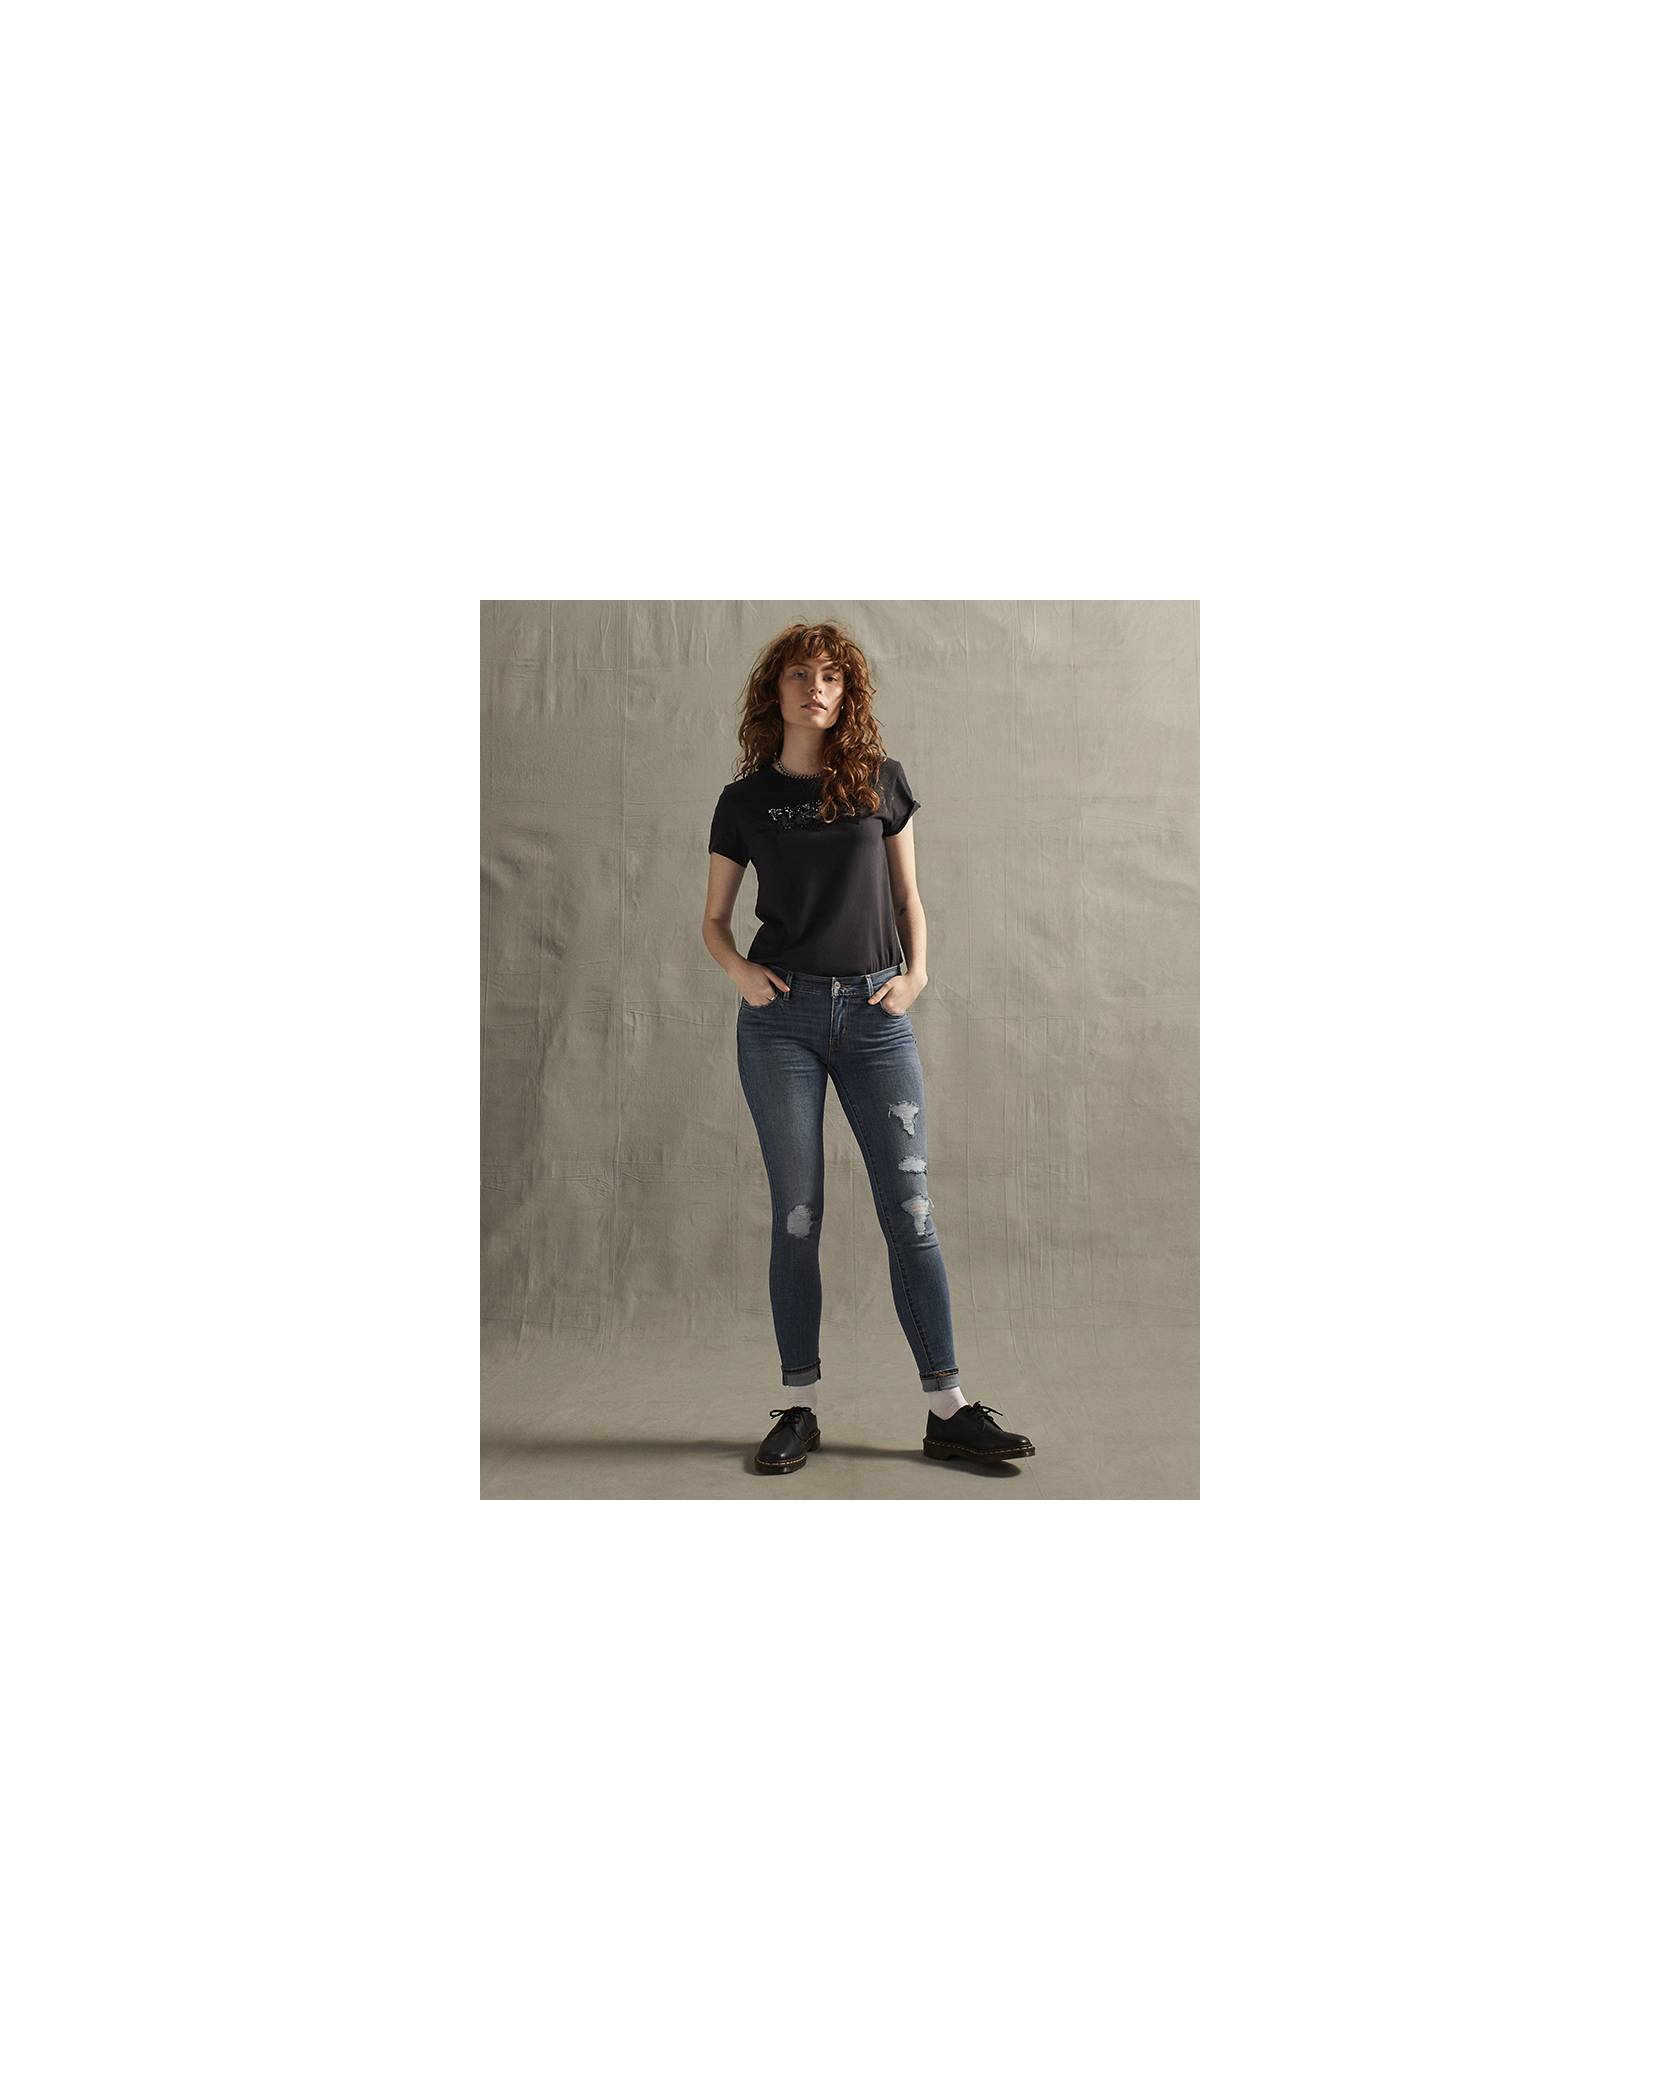 Model wearing the Levi's® 710 Super Skinny Jean.